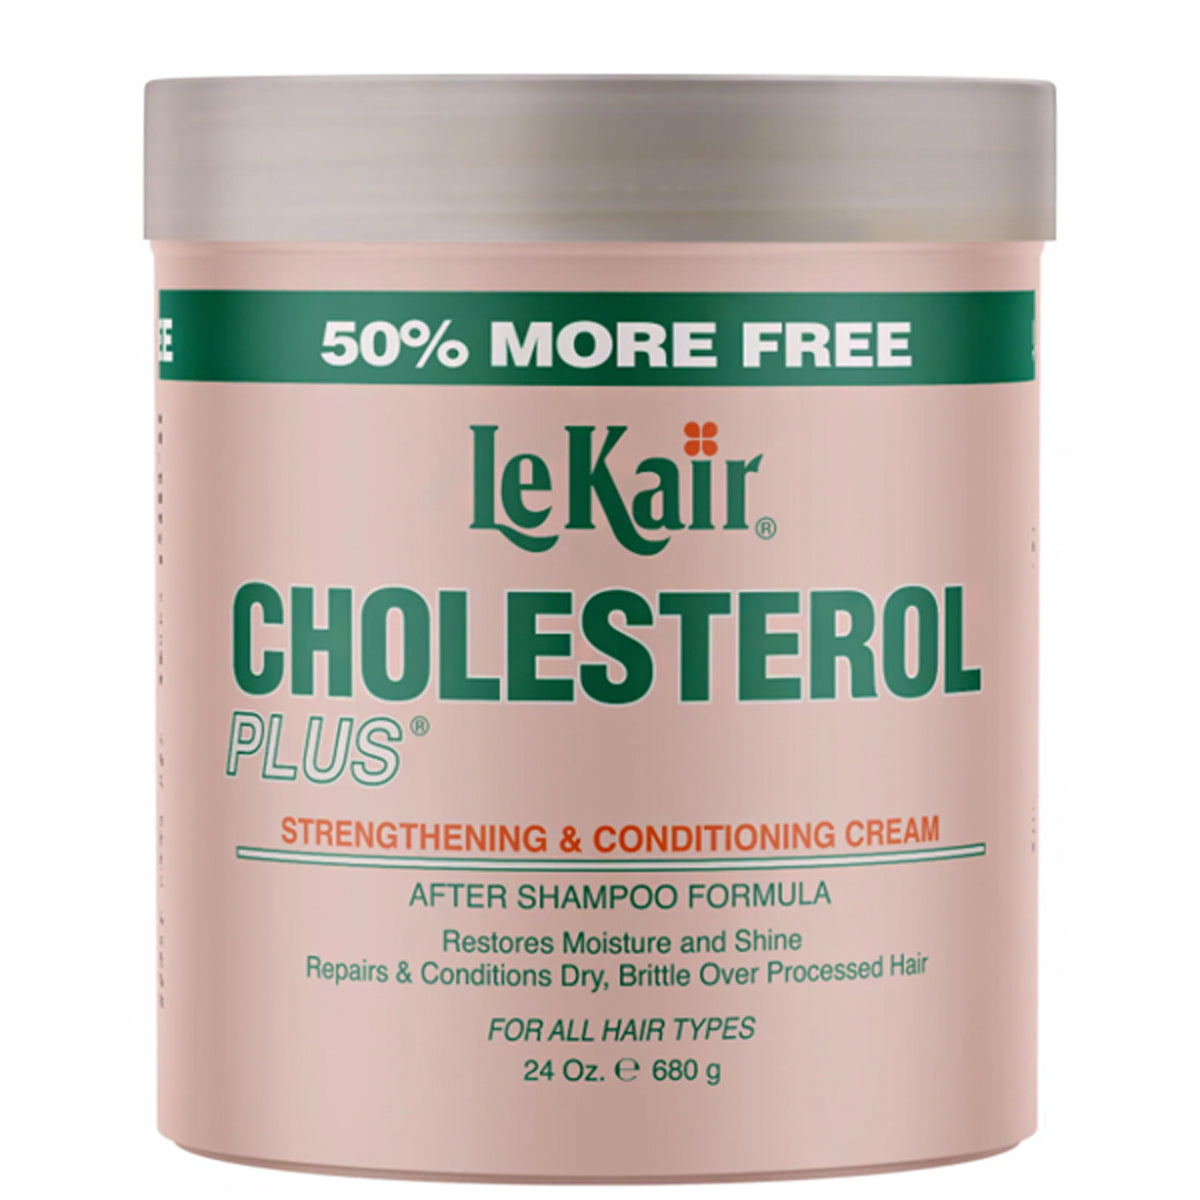 LeKair Cholesterol Plus Strengthening and Conditioning Cream 24oz